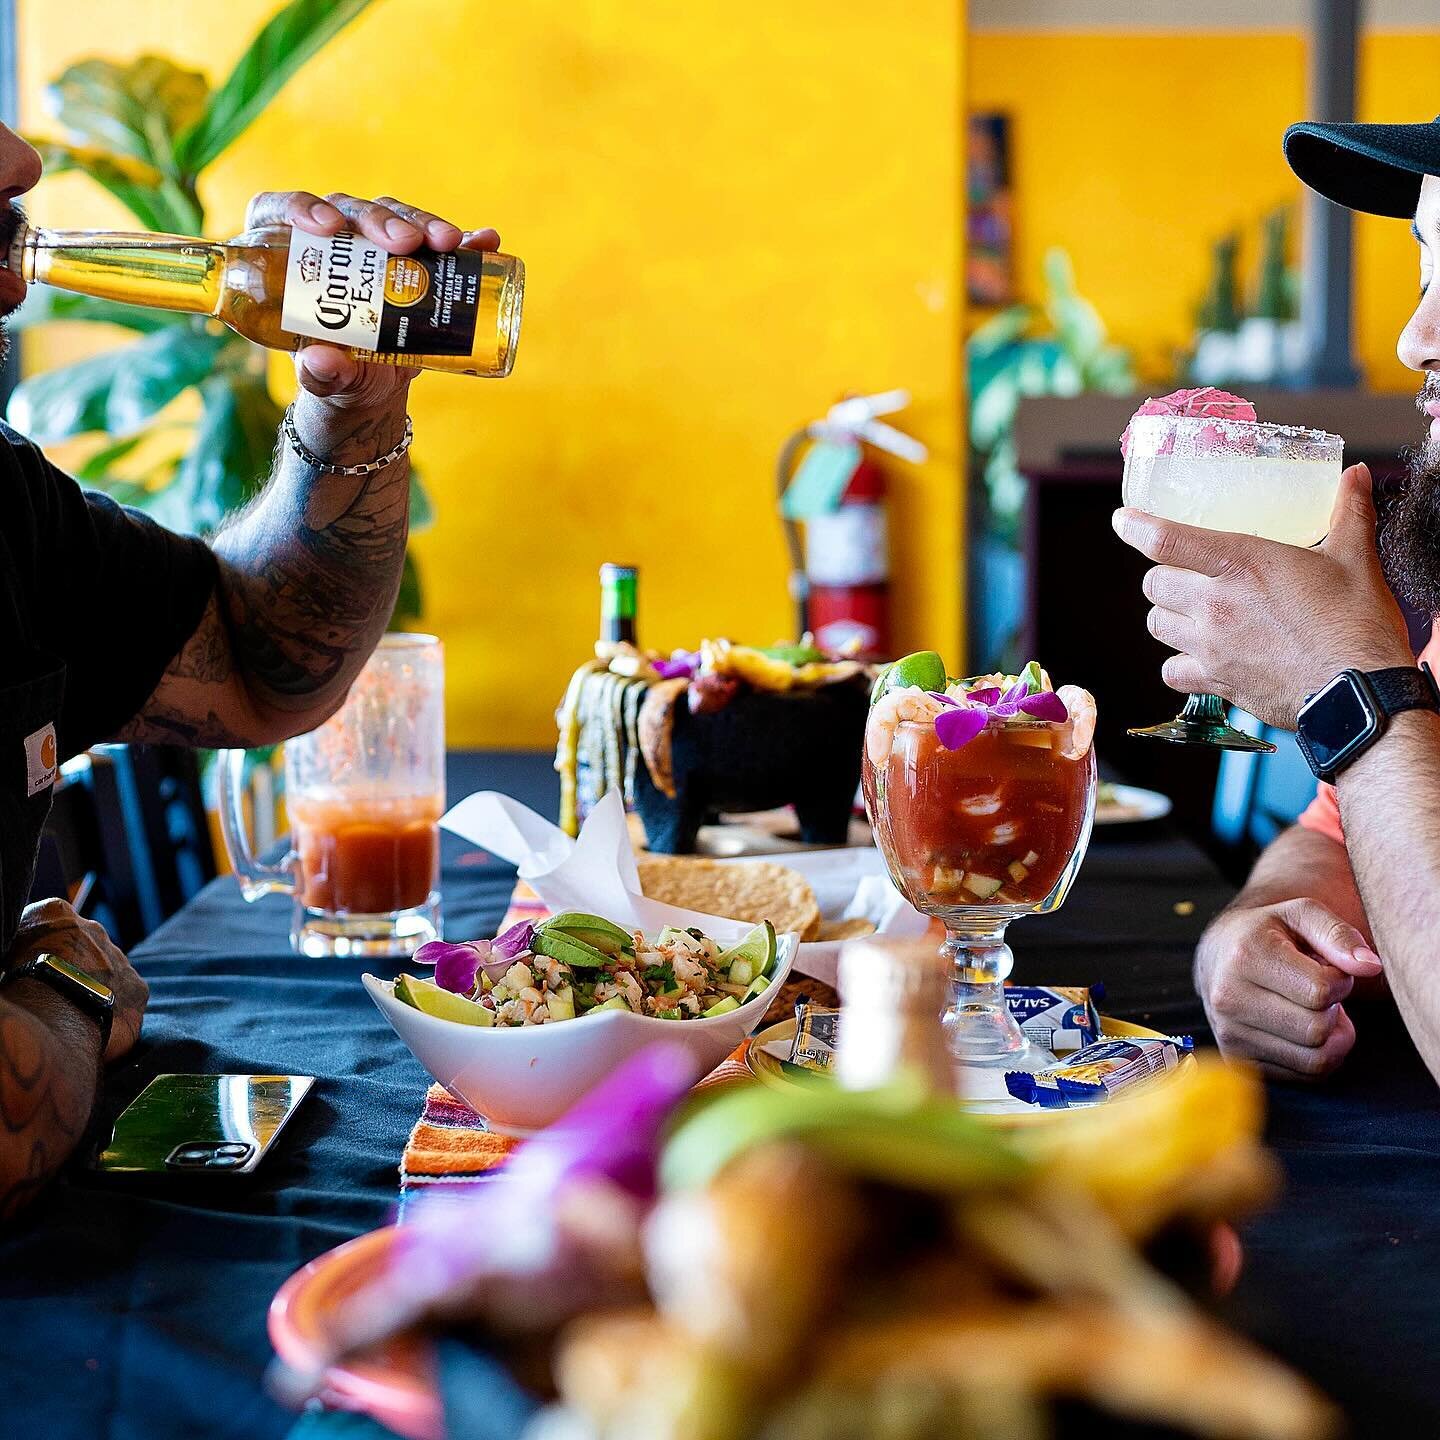 Cheers to the start of a great week! 🍻

#instafood #tequila #salsa #mexicanfood #foodlover #foodporn #margaritas #burrito #comida #taco #yummy #mexicanrestaurant #foodblogger #tacos #tacotuesday #delicious #guacamole #food #mexicancuisine #comidamex